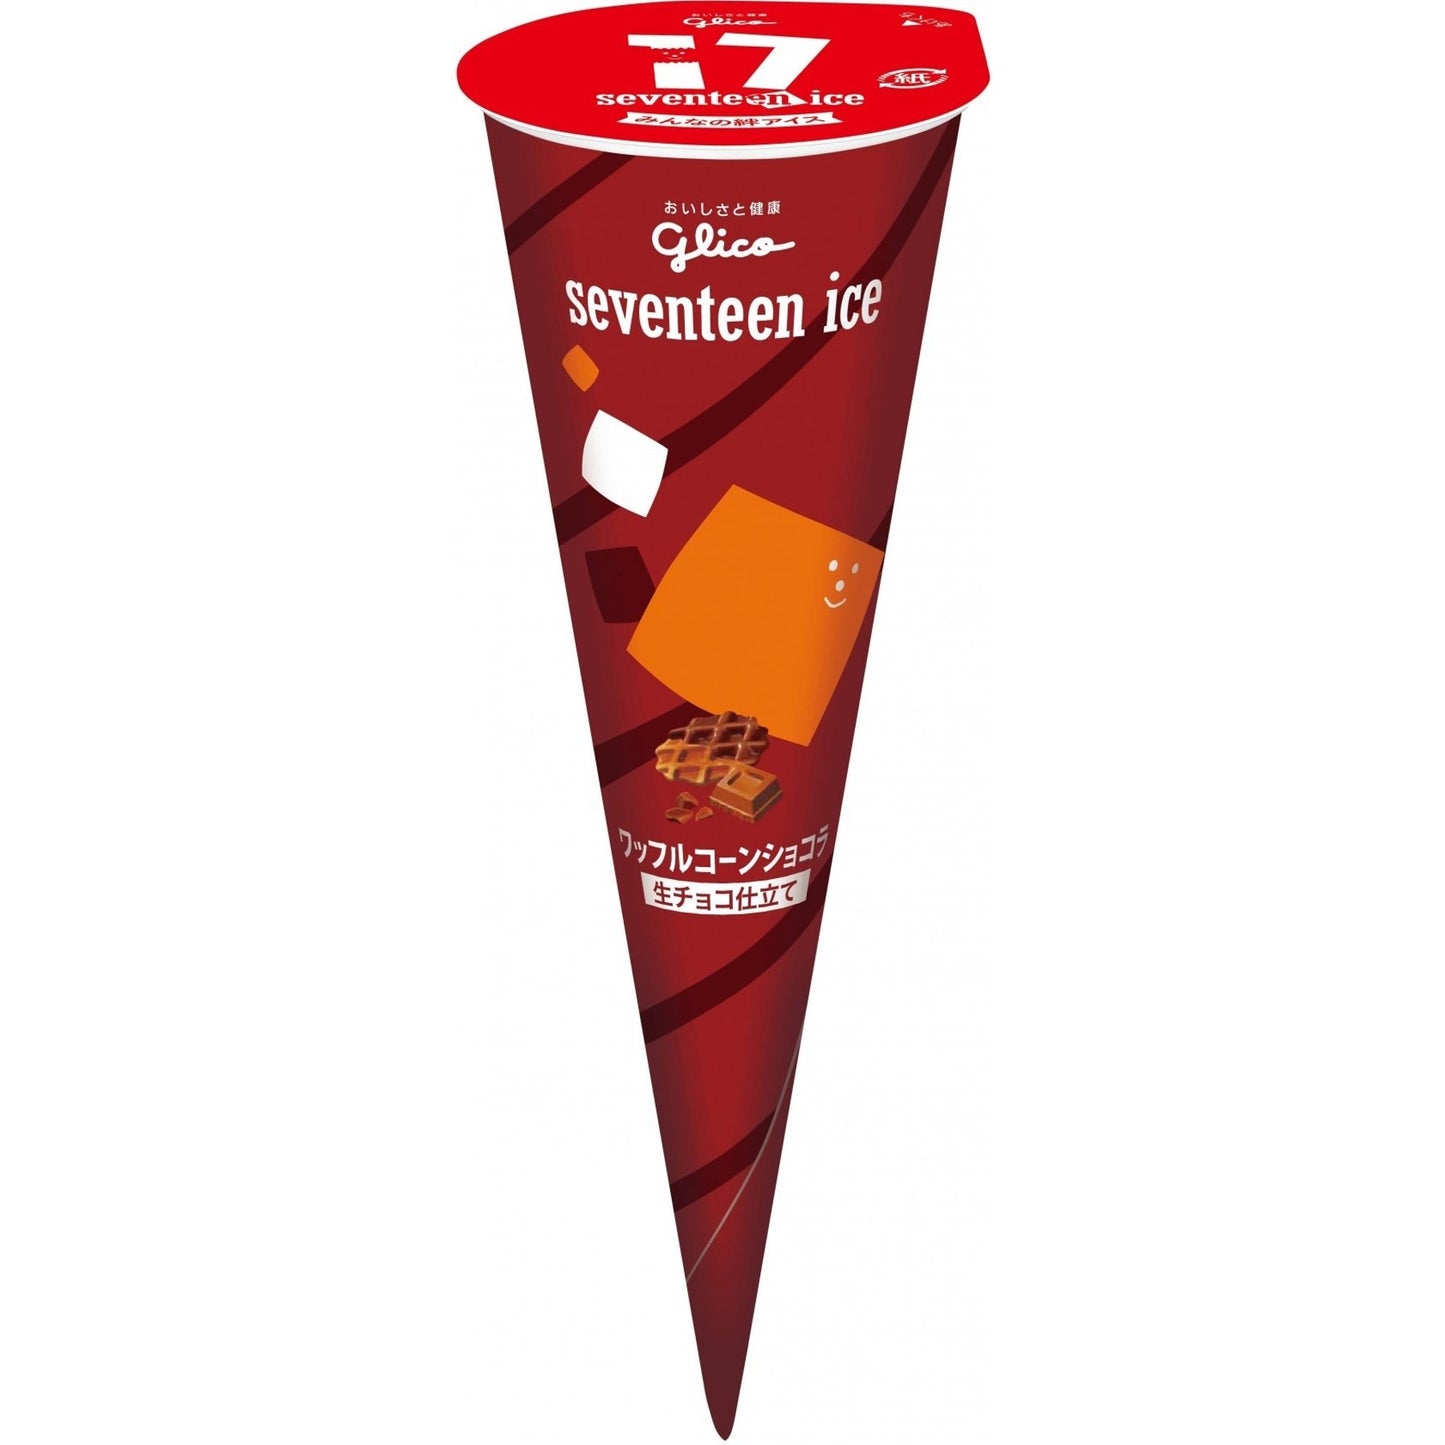 [Glico][Seventeen Ice Waffle Cone Chocolat Raw Chocolate Tailoring]